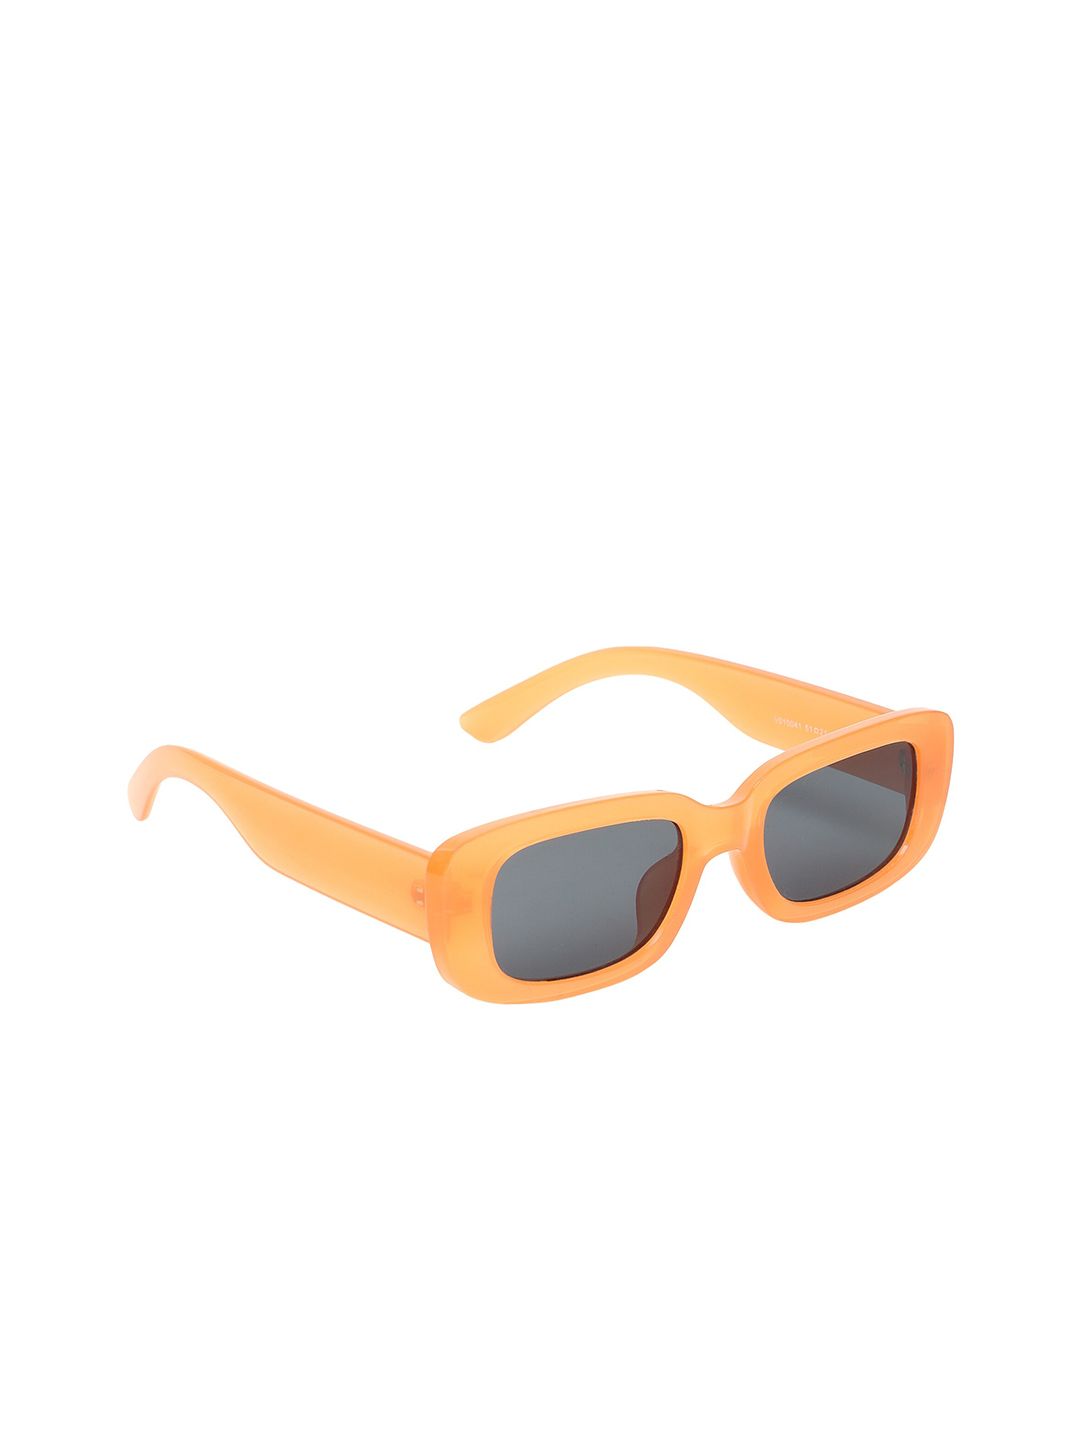 CRIBA Unisex Black Lens & Orange Square Sunglasses with UV Protected Lens CR_CANDY_ORANGE Price in India